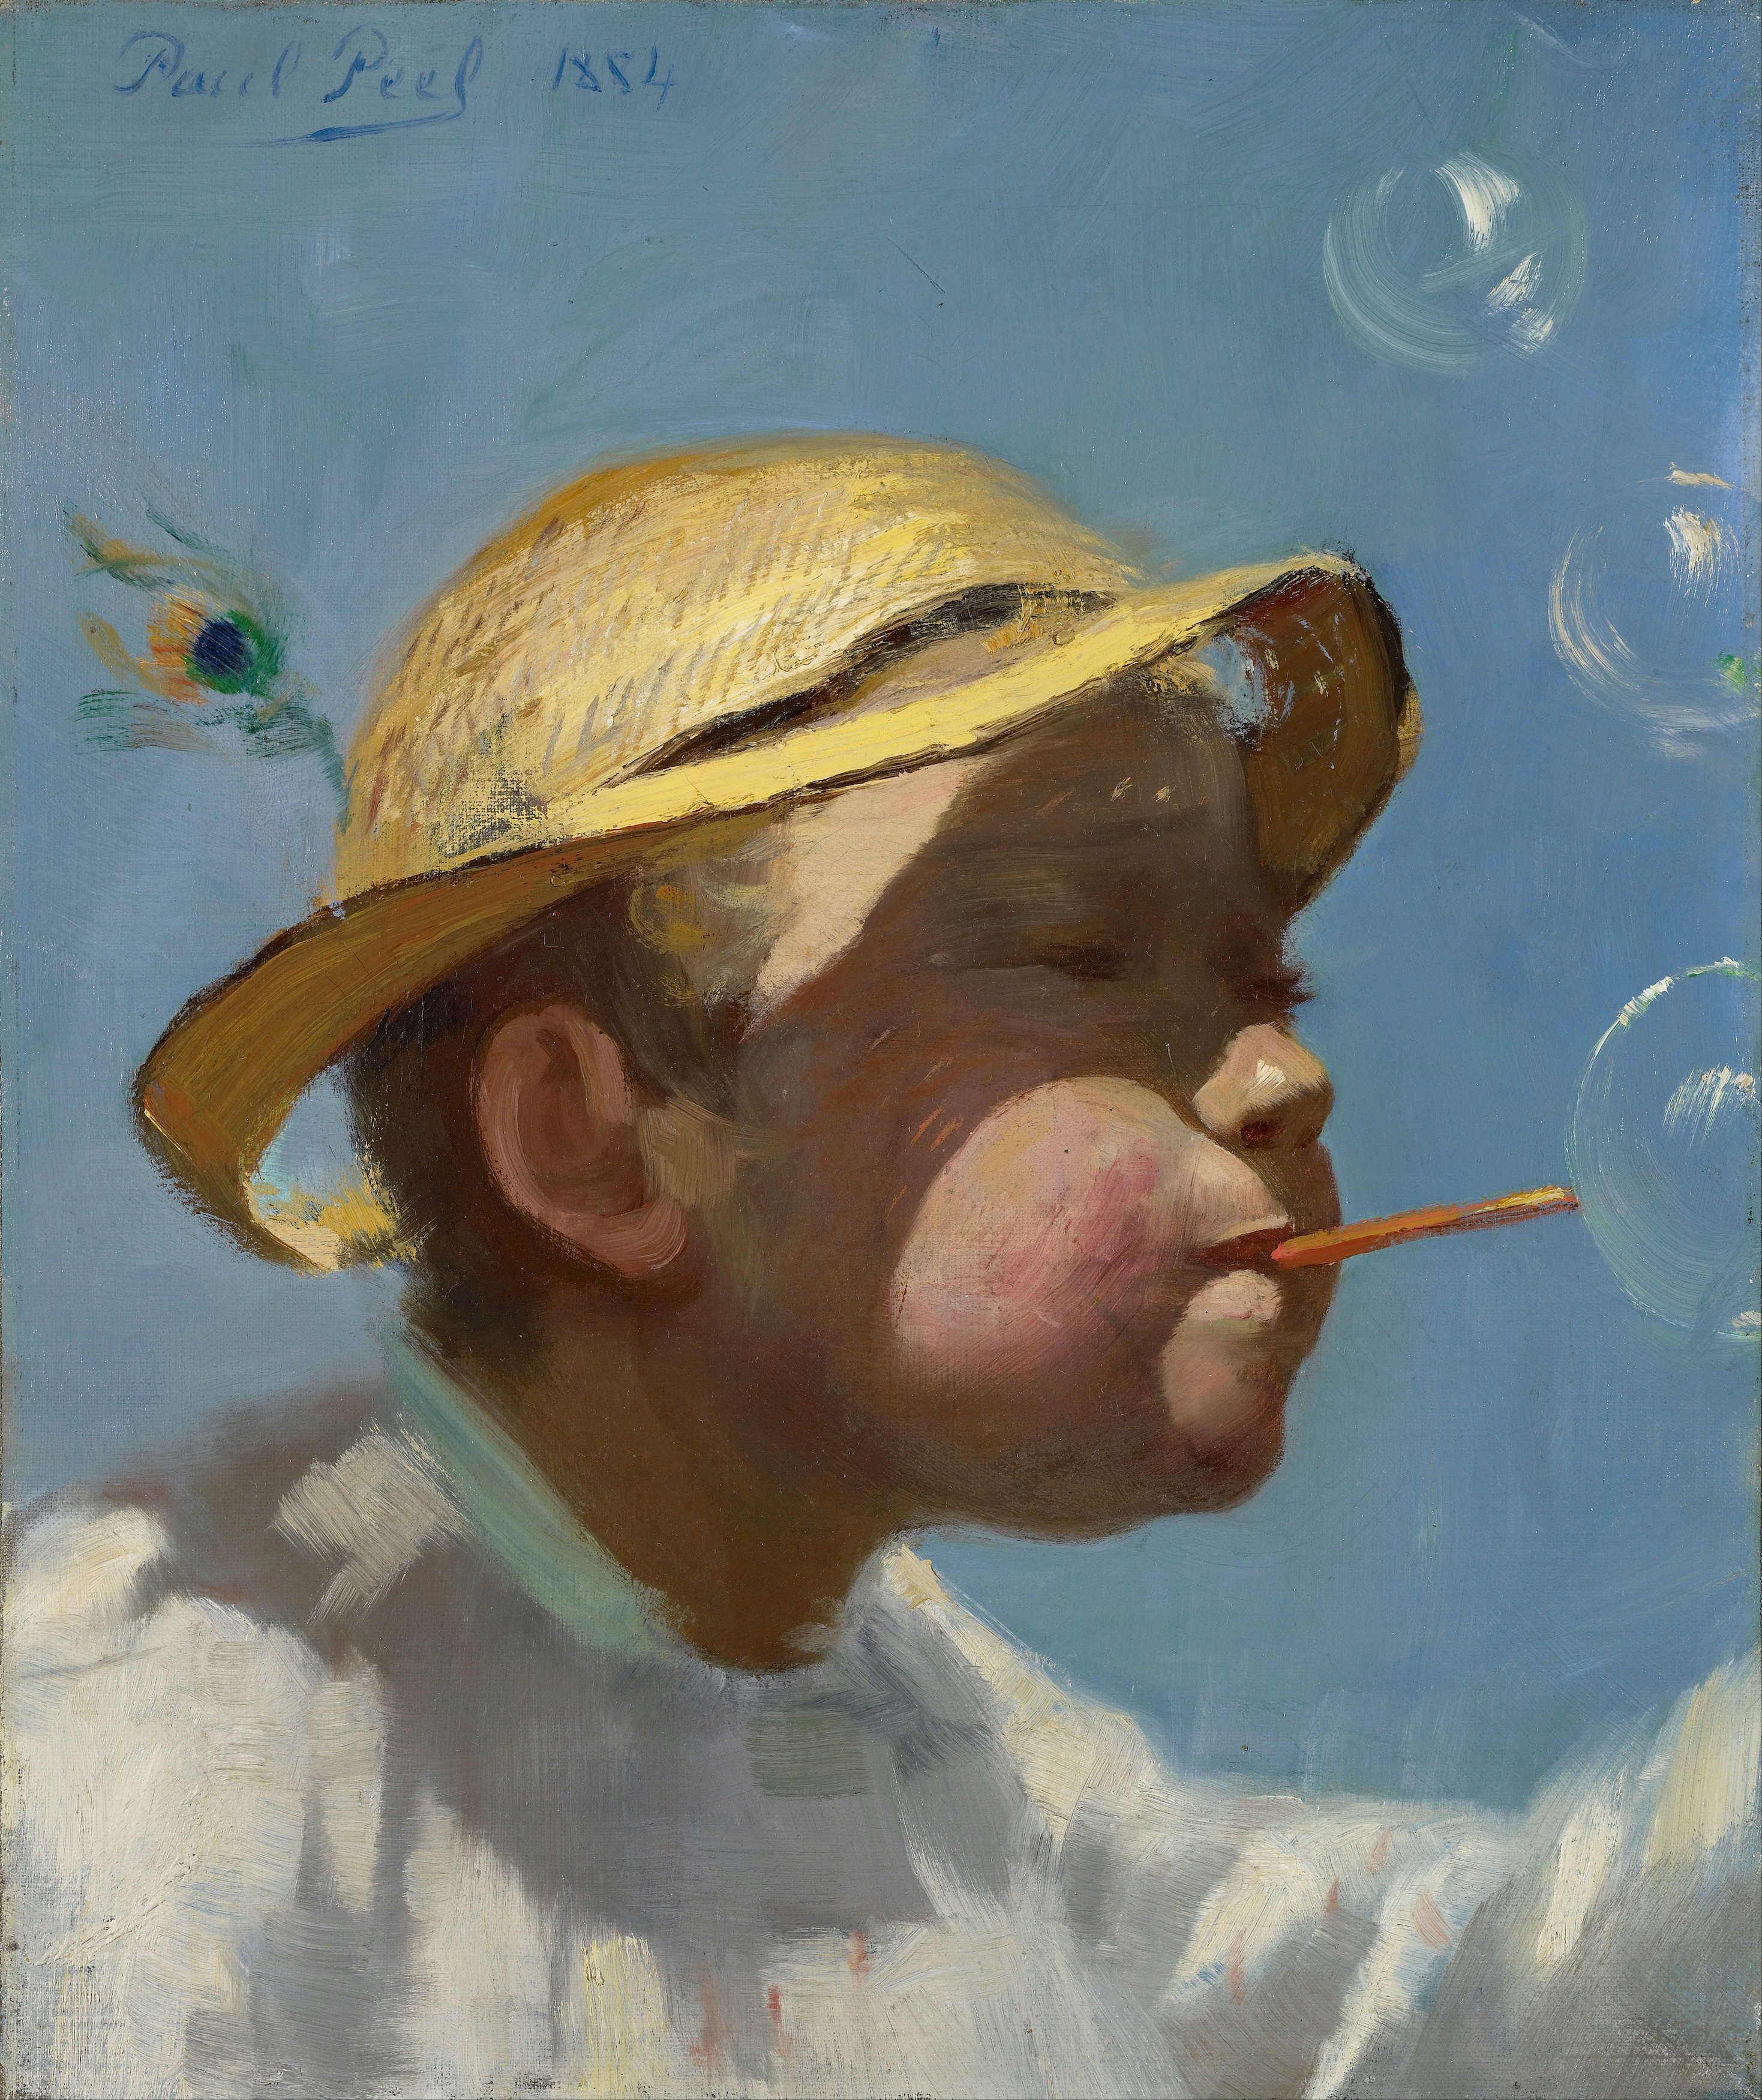 Il ragazzo delle bolle by Paul Peel - 1884 - 35,90 x 43,20 cm 